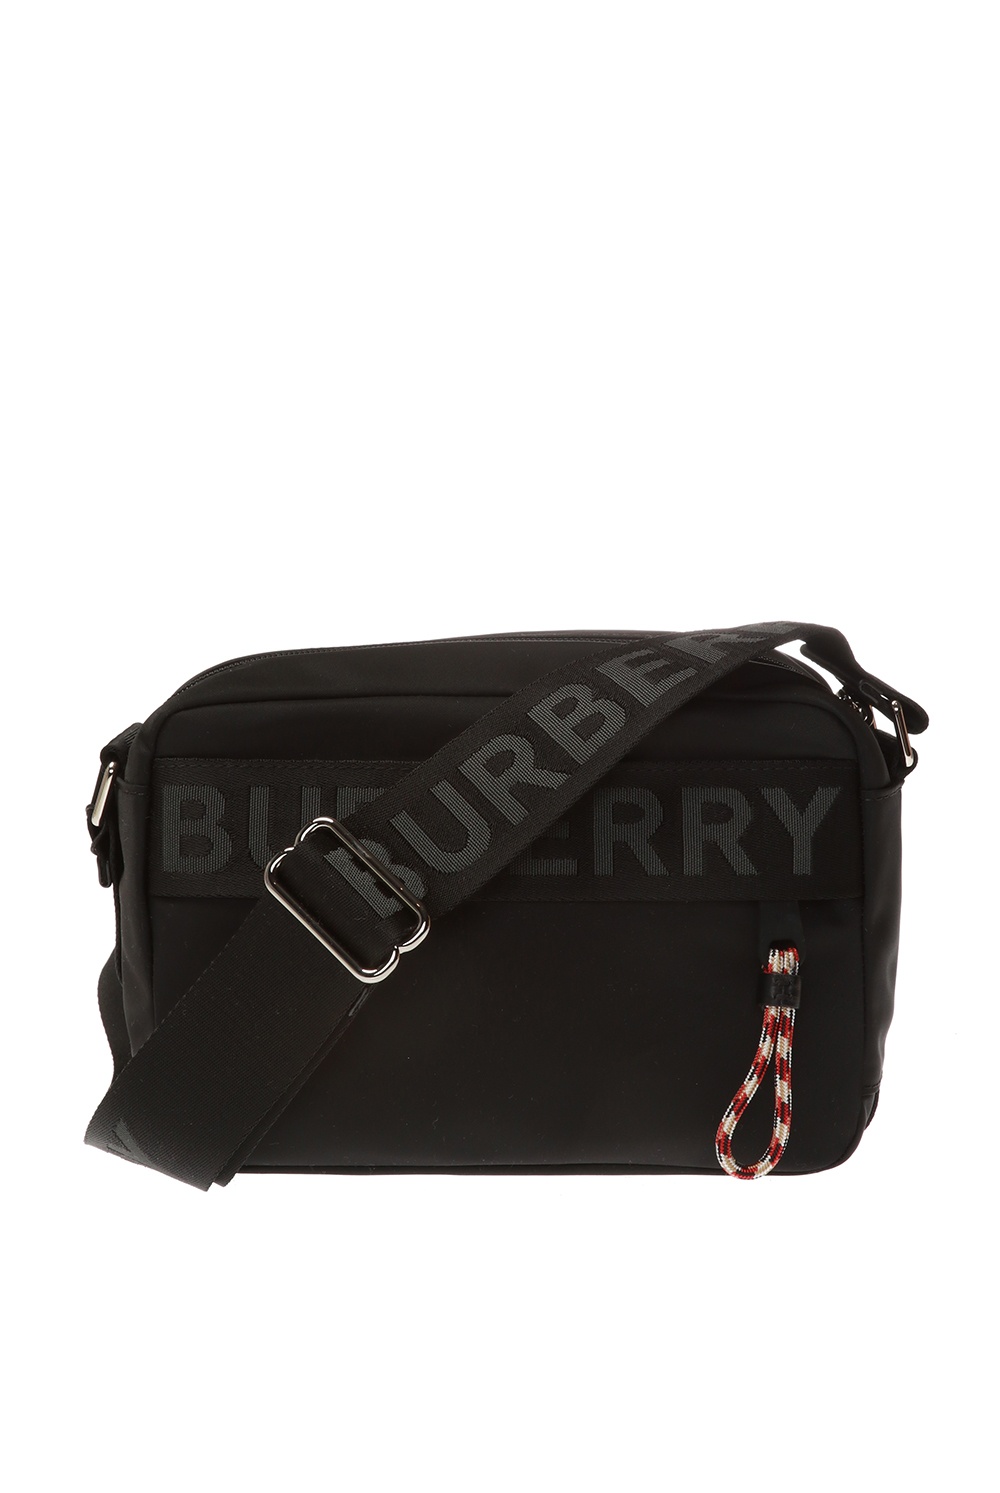 Brown 'Paddy' belt bag Burberry - Vitkac Canada